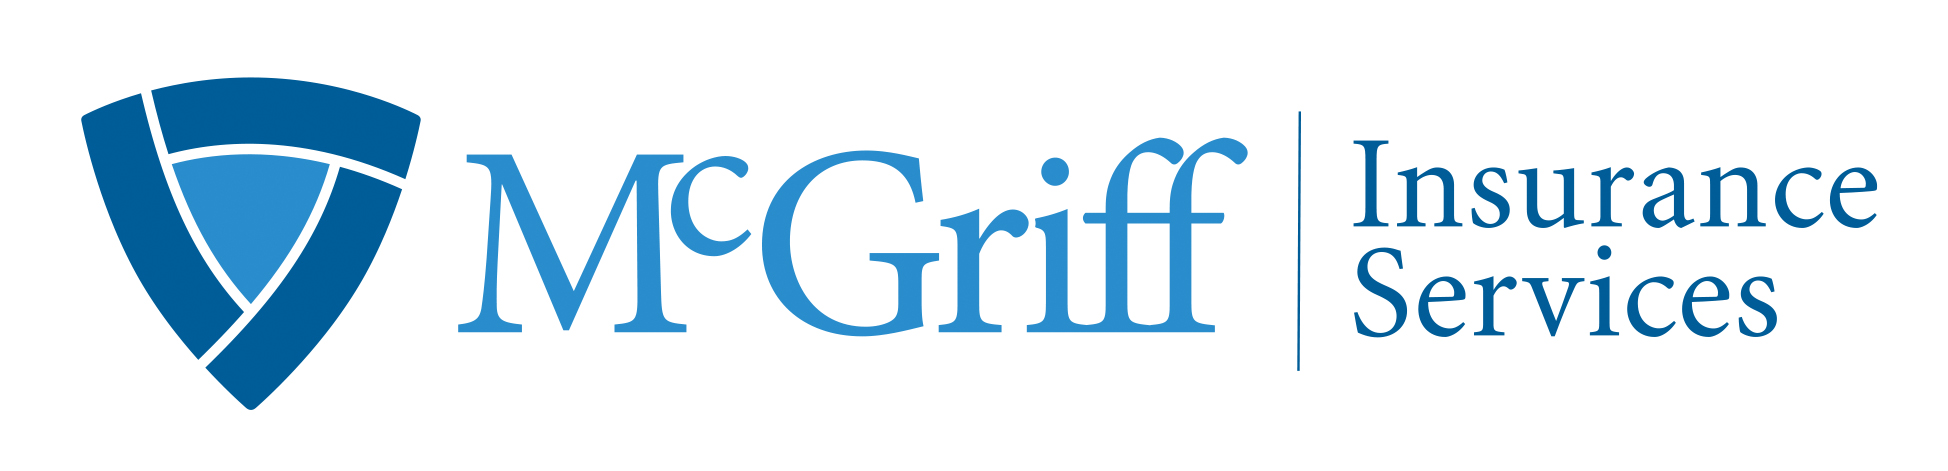 McGriff Insurance Services logo final.jpg